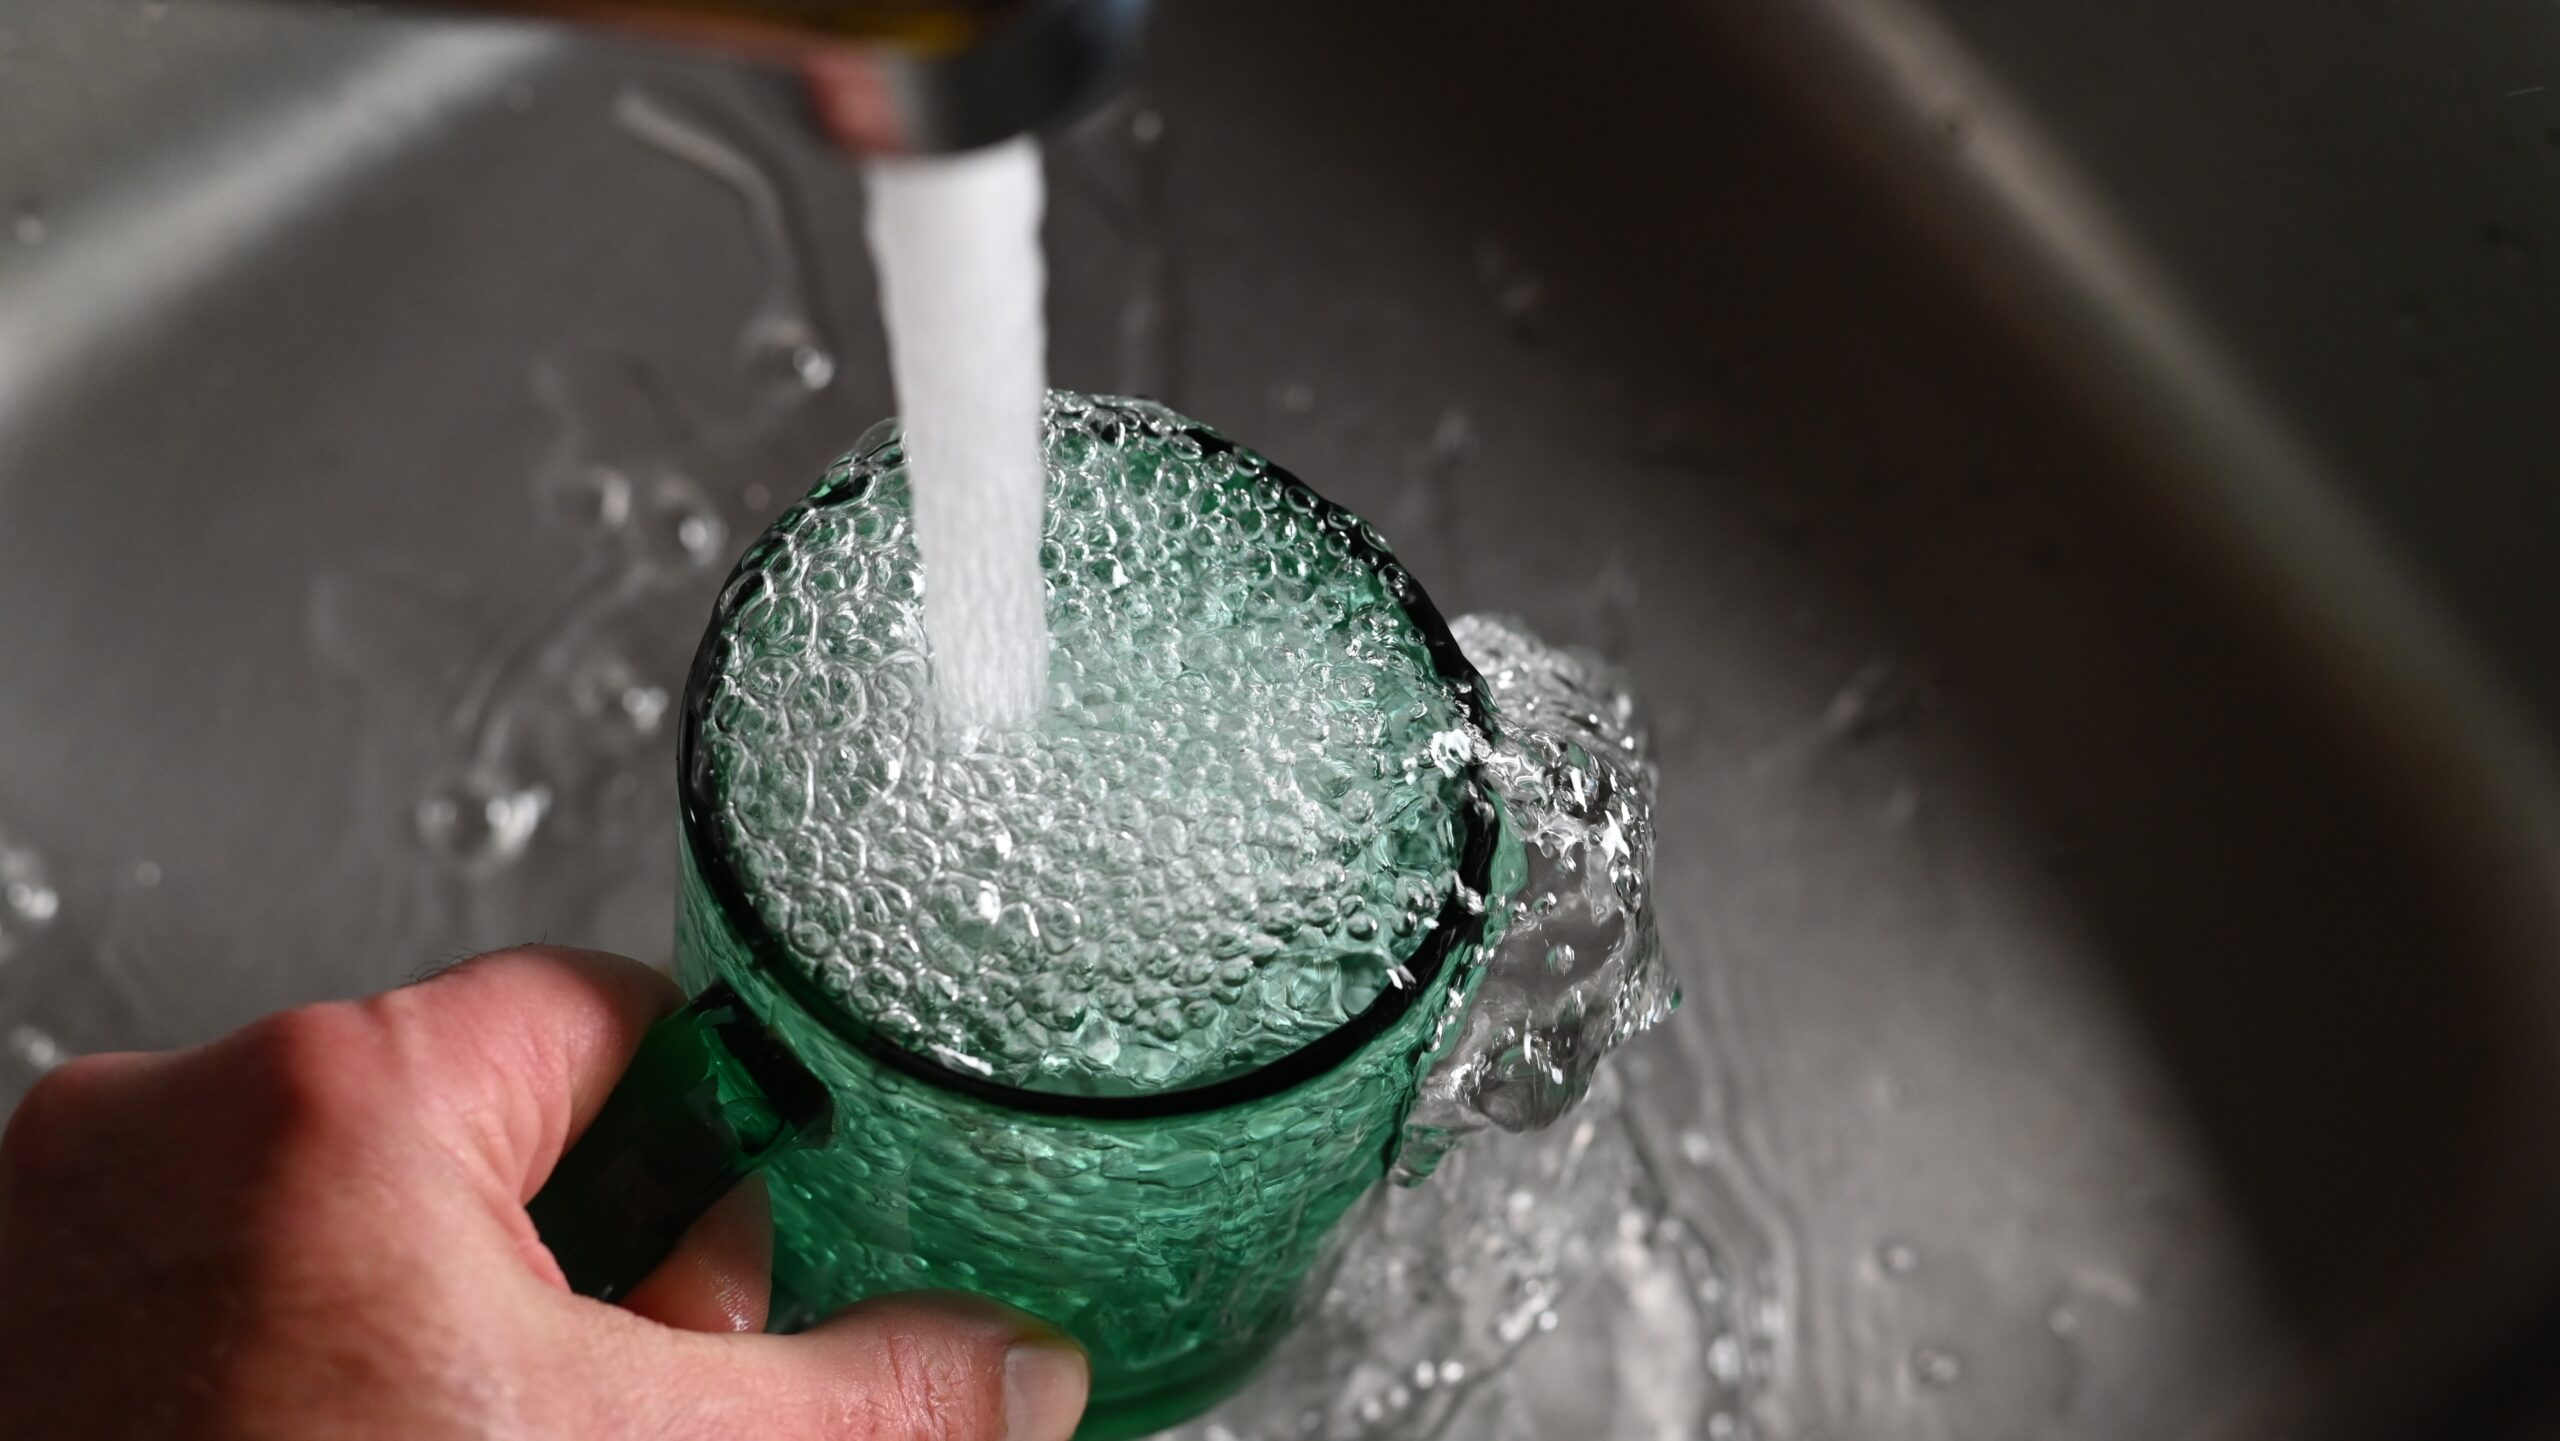 brain-eating amoeba tap water